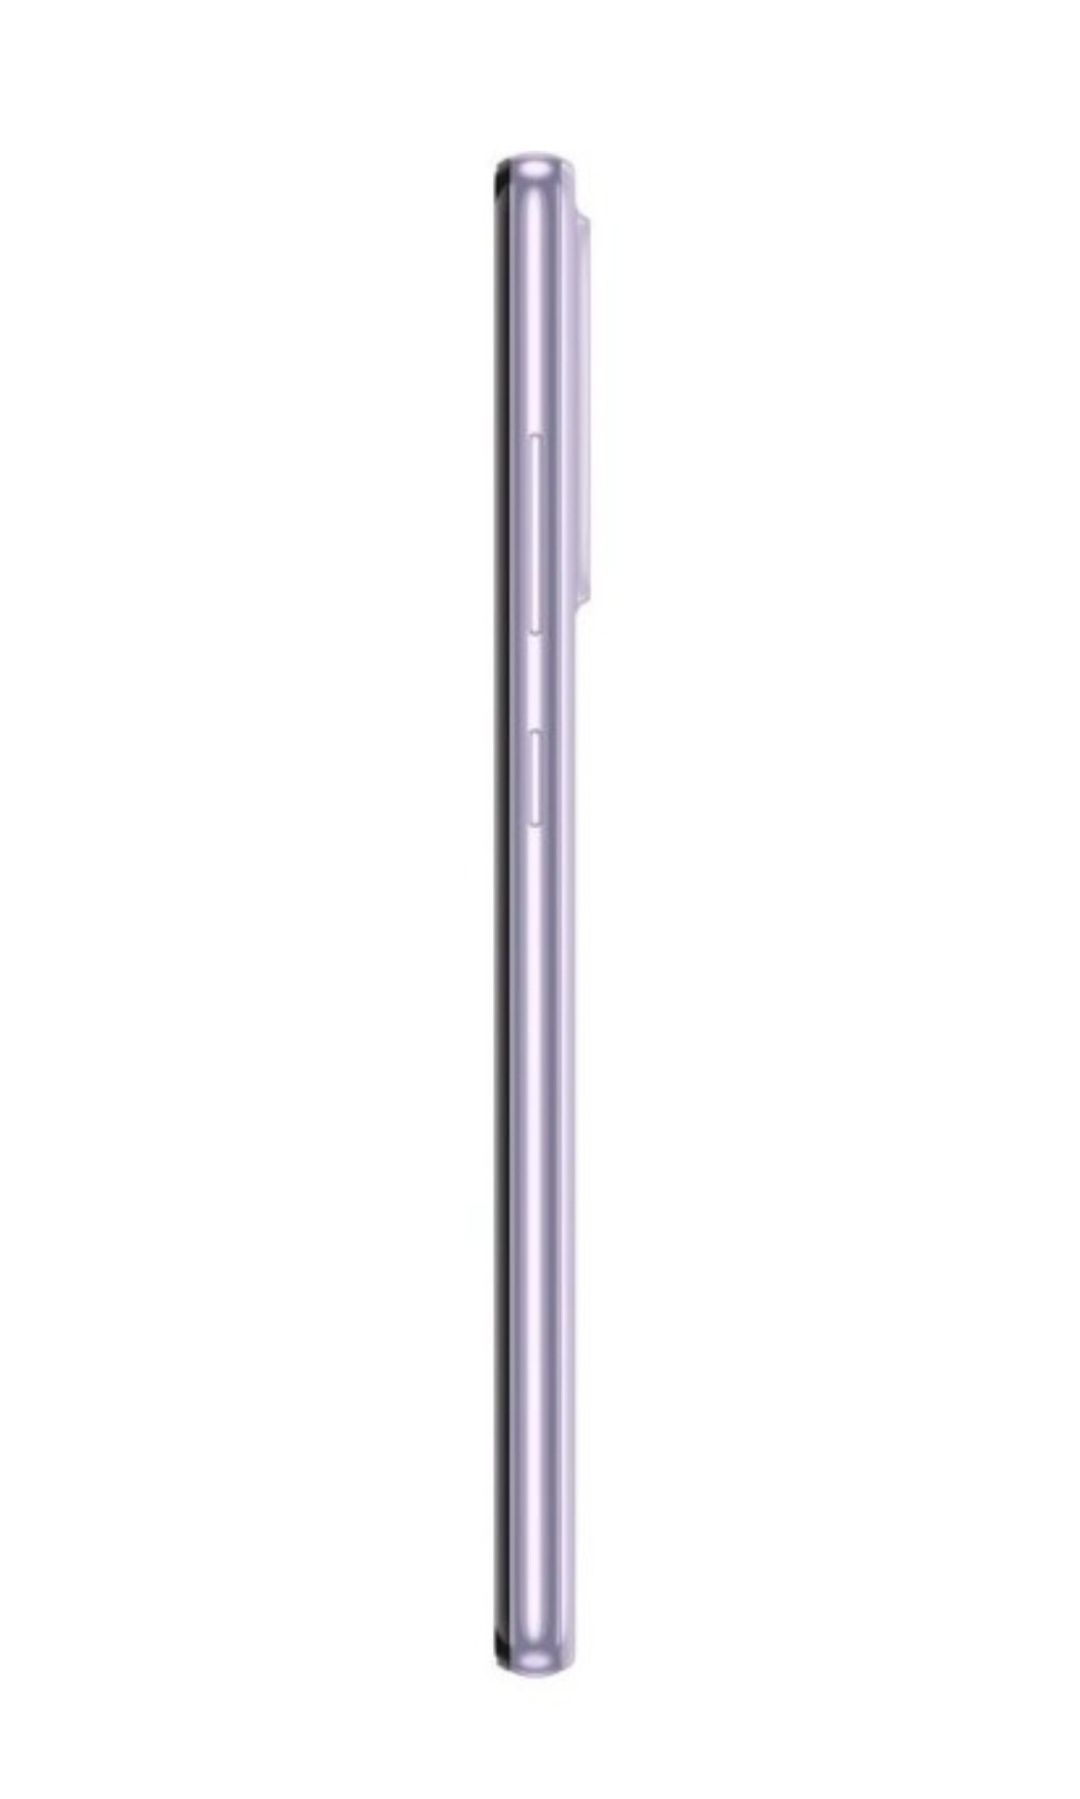 Смартфон Samsung Galaxy A52 4 ГБ/128 ГБ фиолетовый